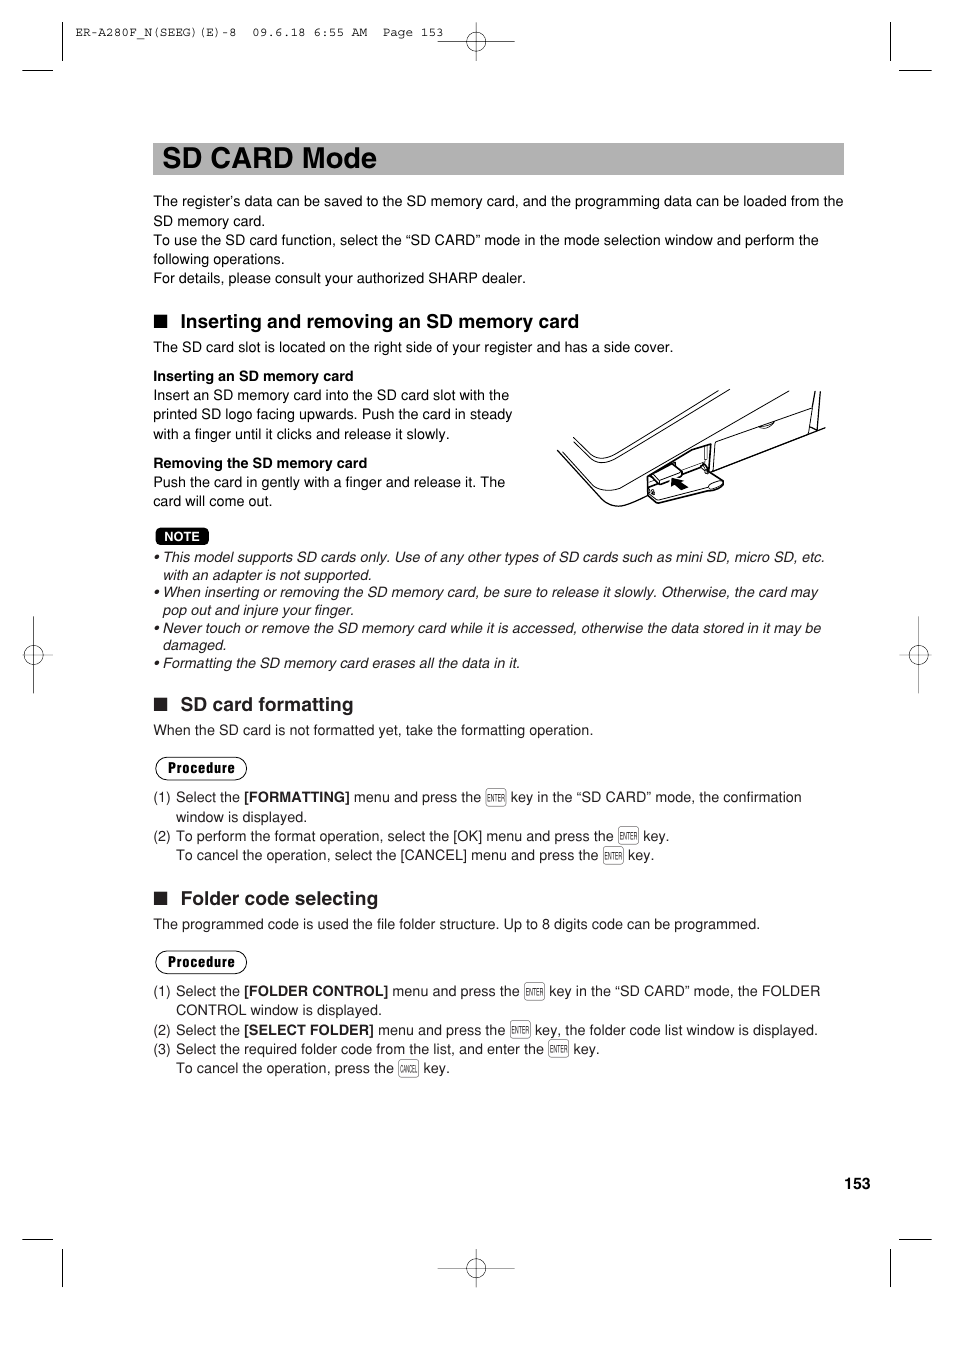 Sd card mode | Sharp ER-A280F User Manual | Page 155 / 188